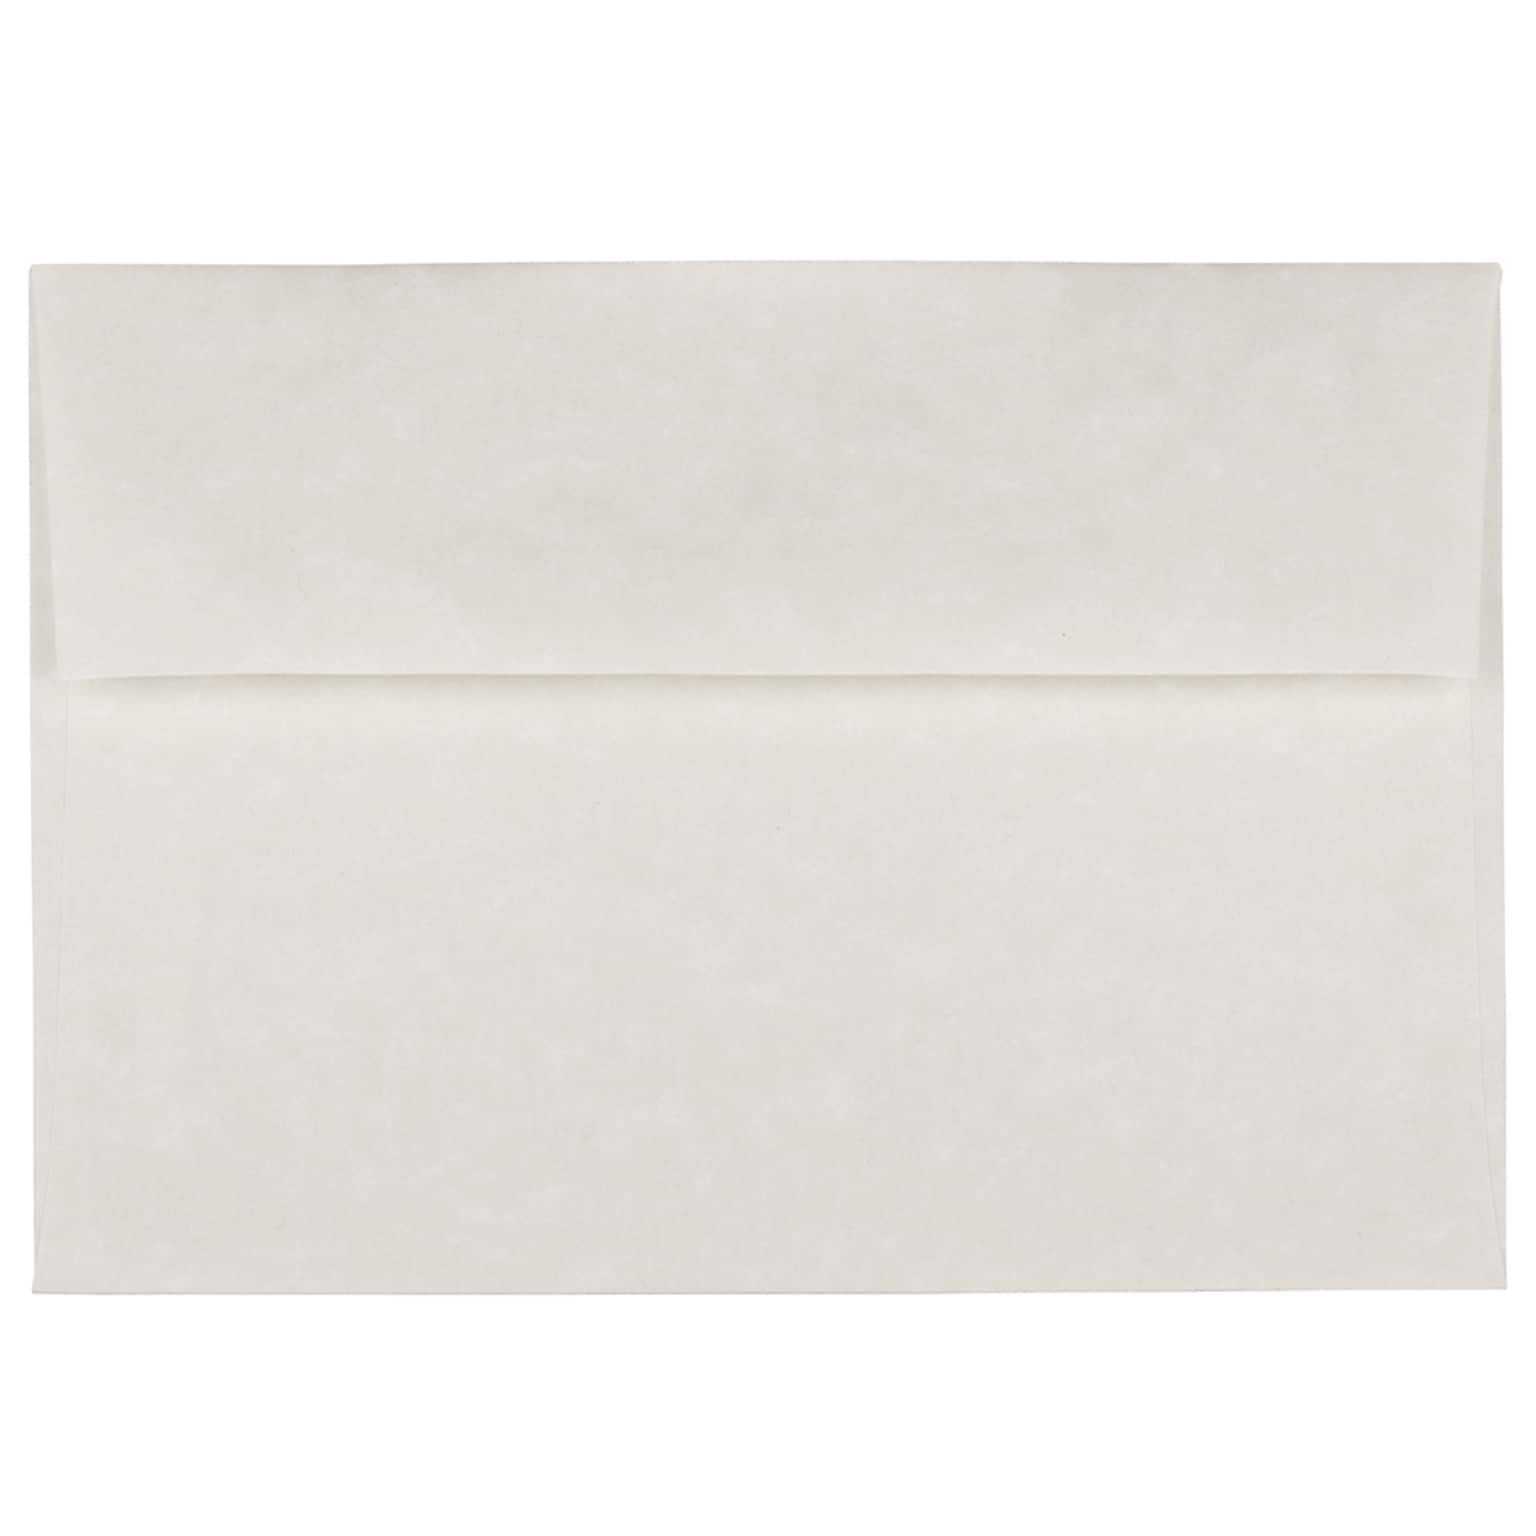 JAM Paper® A7 Parchment Invitation Envelopes, 5.25 x 7.25, White Recycled, Bulk 250/Box (12672H)